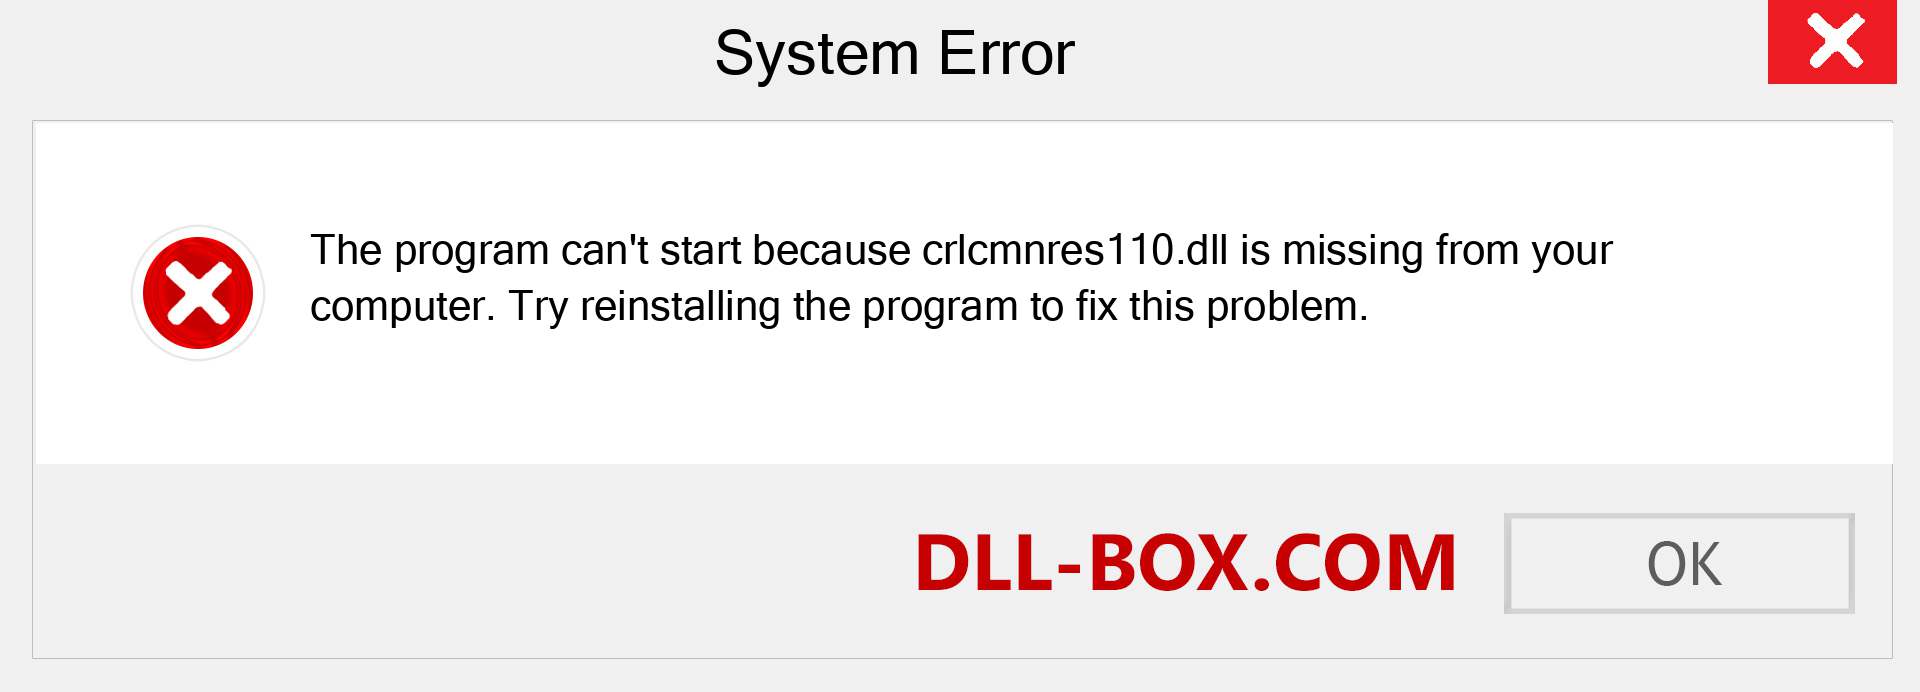  crlcmnres110.dll file is missing?. Download for Windows 7, 8, 10 - Fix  crlcmnres110 dll Missing Error on Windows, photos, images